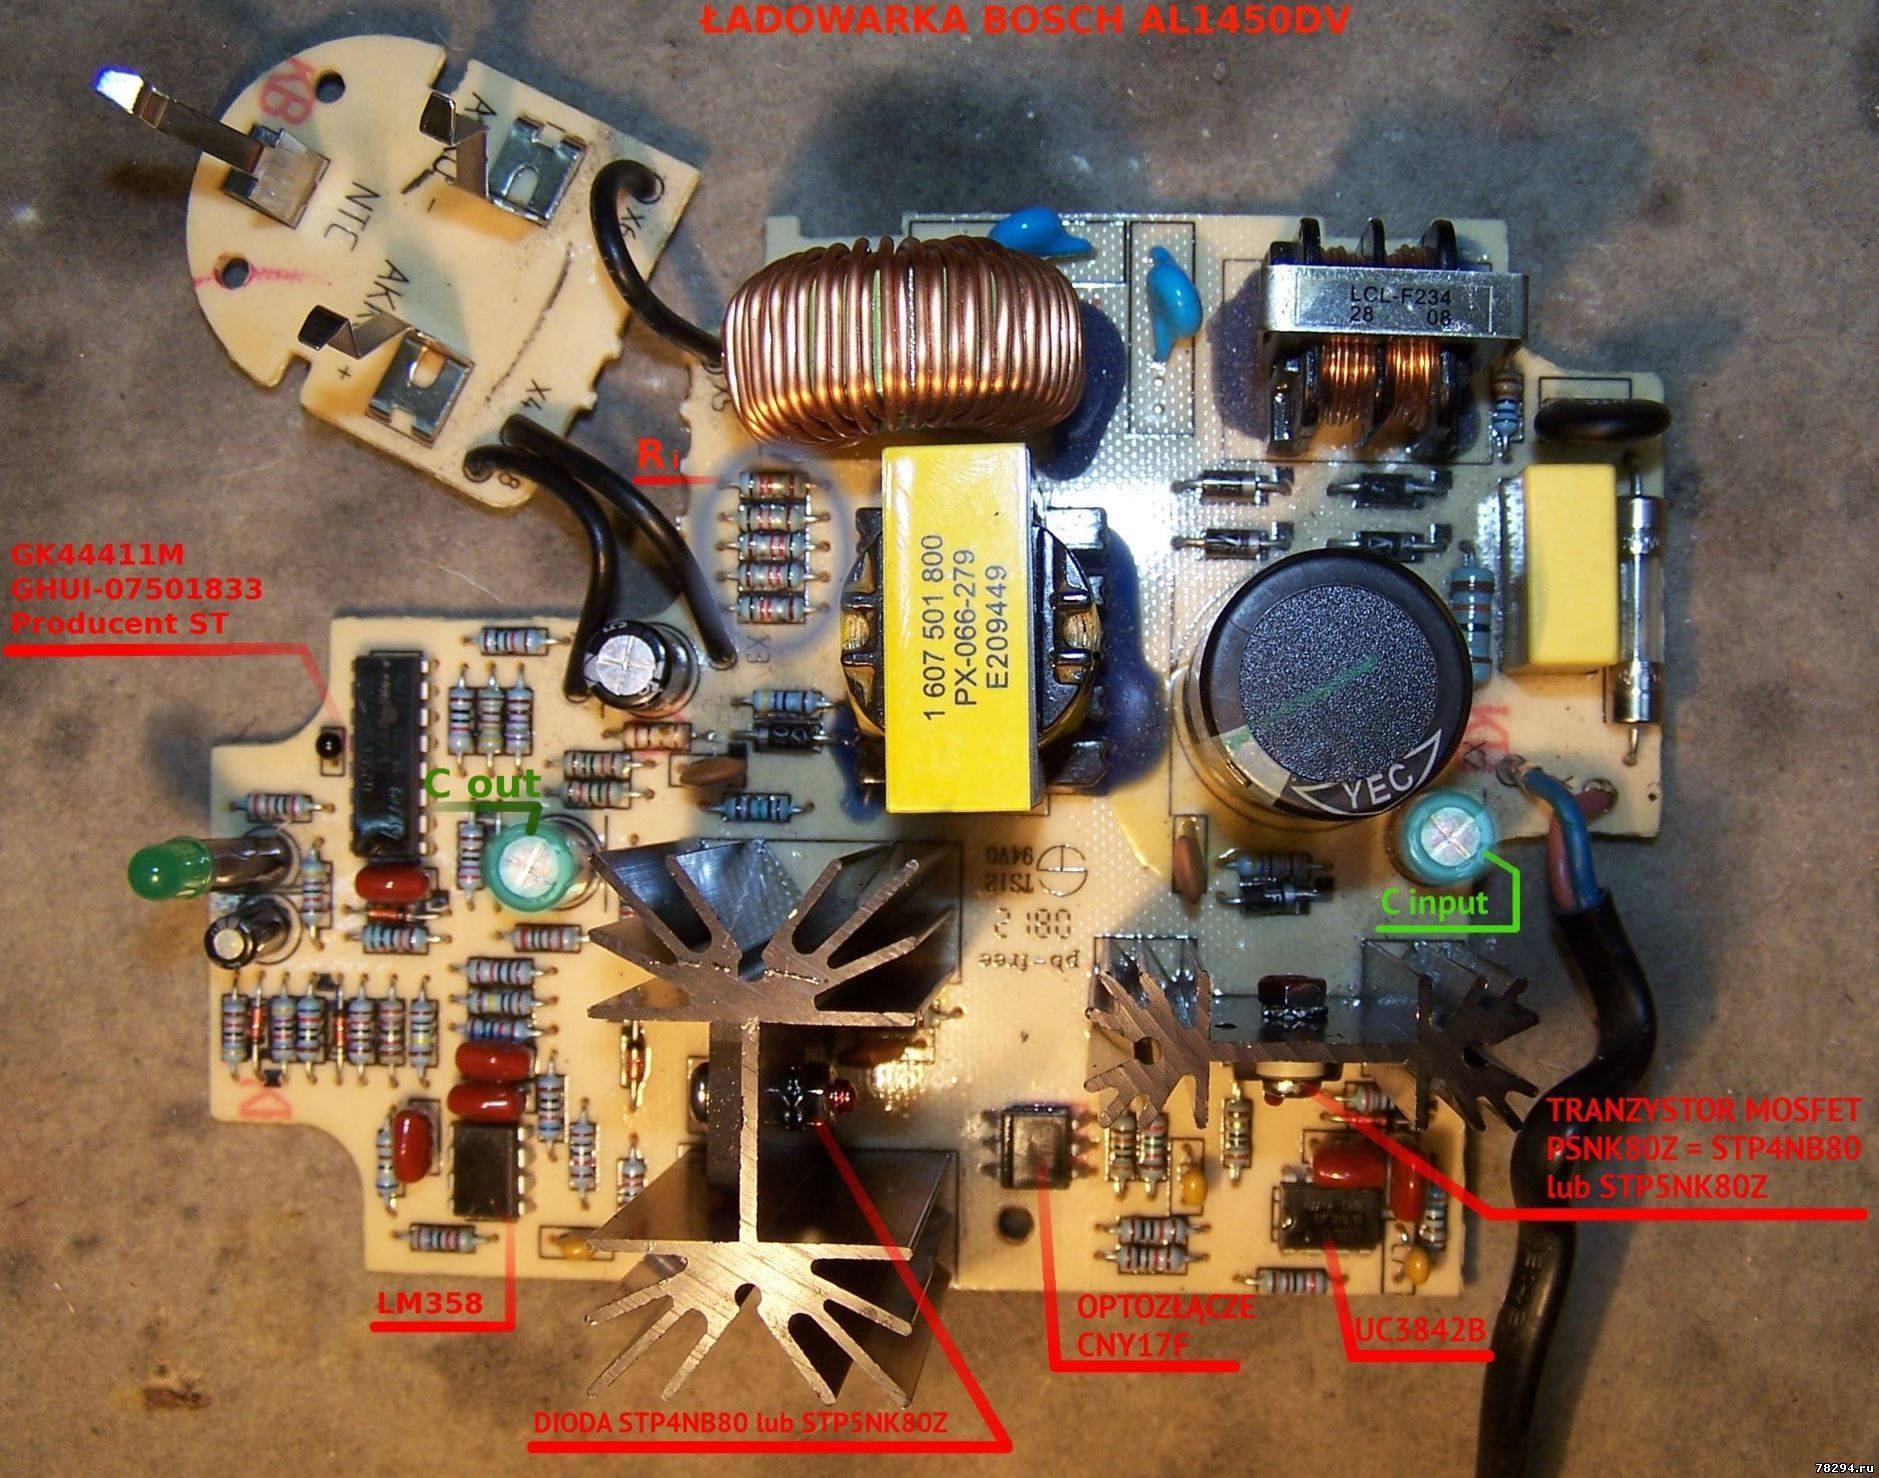 Переделка шуруповертов на литиевые аккумуляторы 18650 - схемы и инструкции | аккумуляторы и батареи